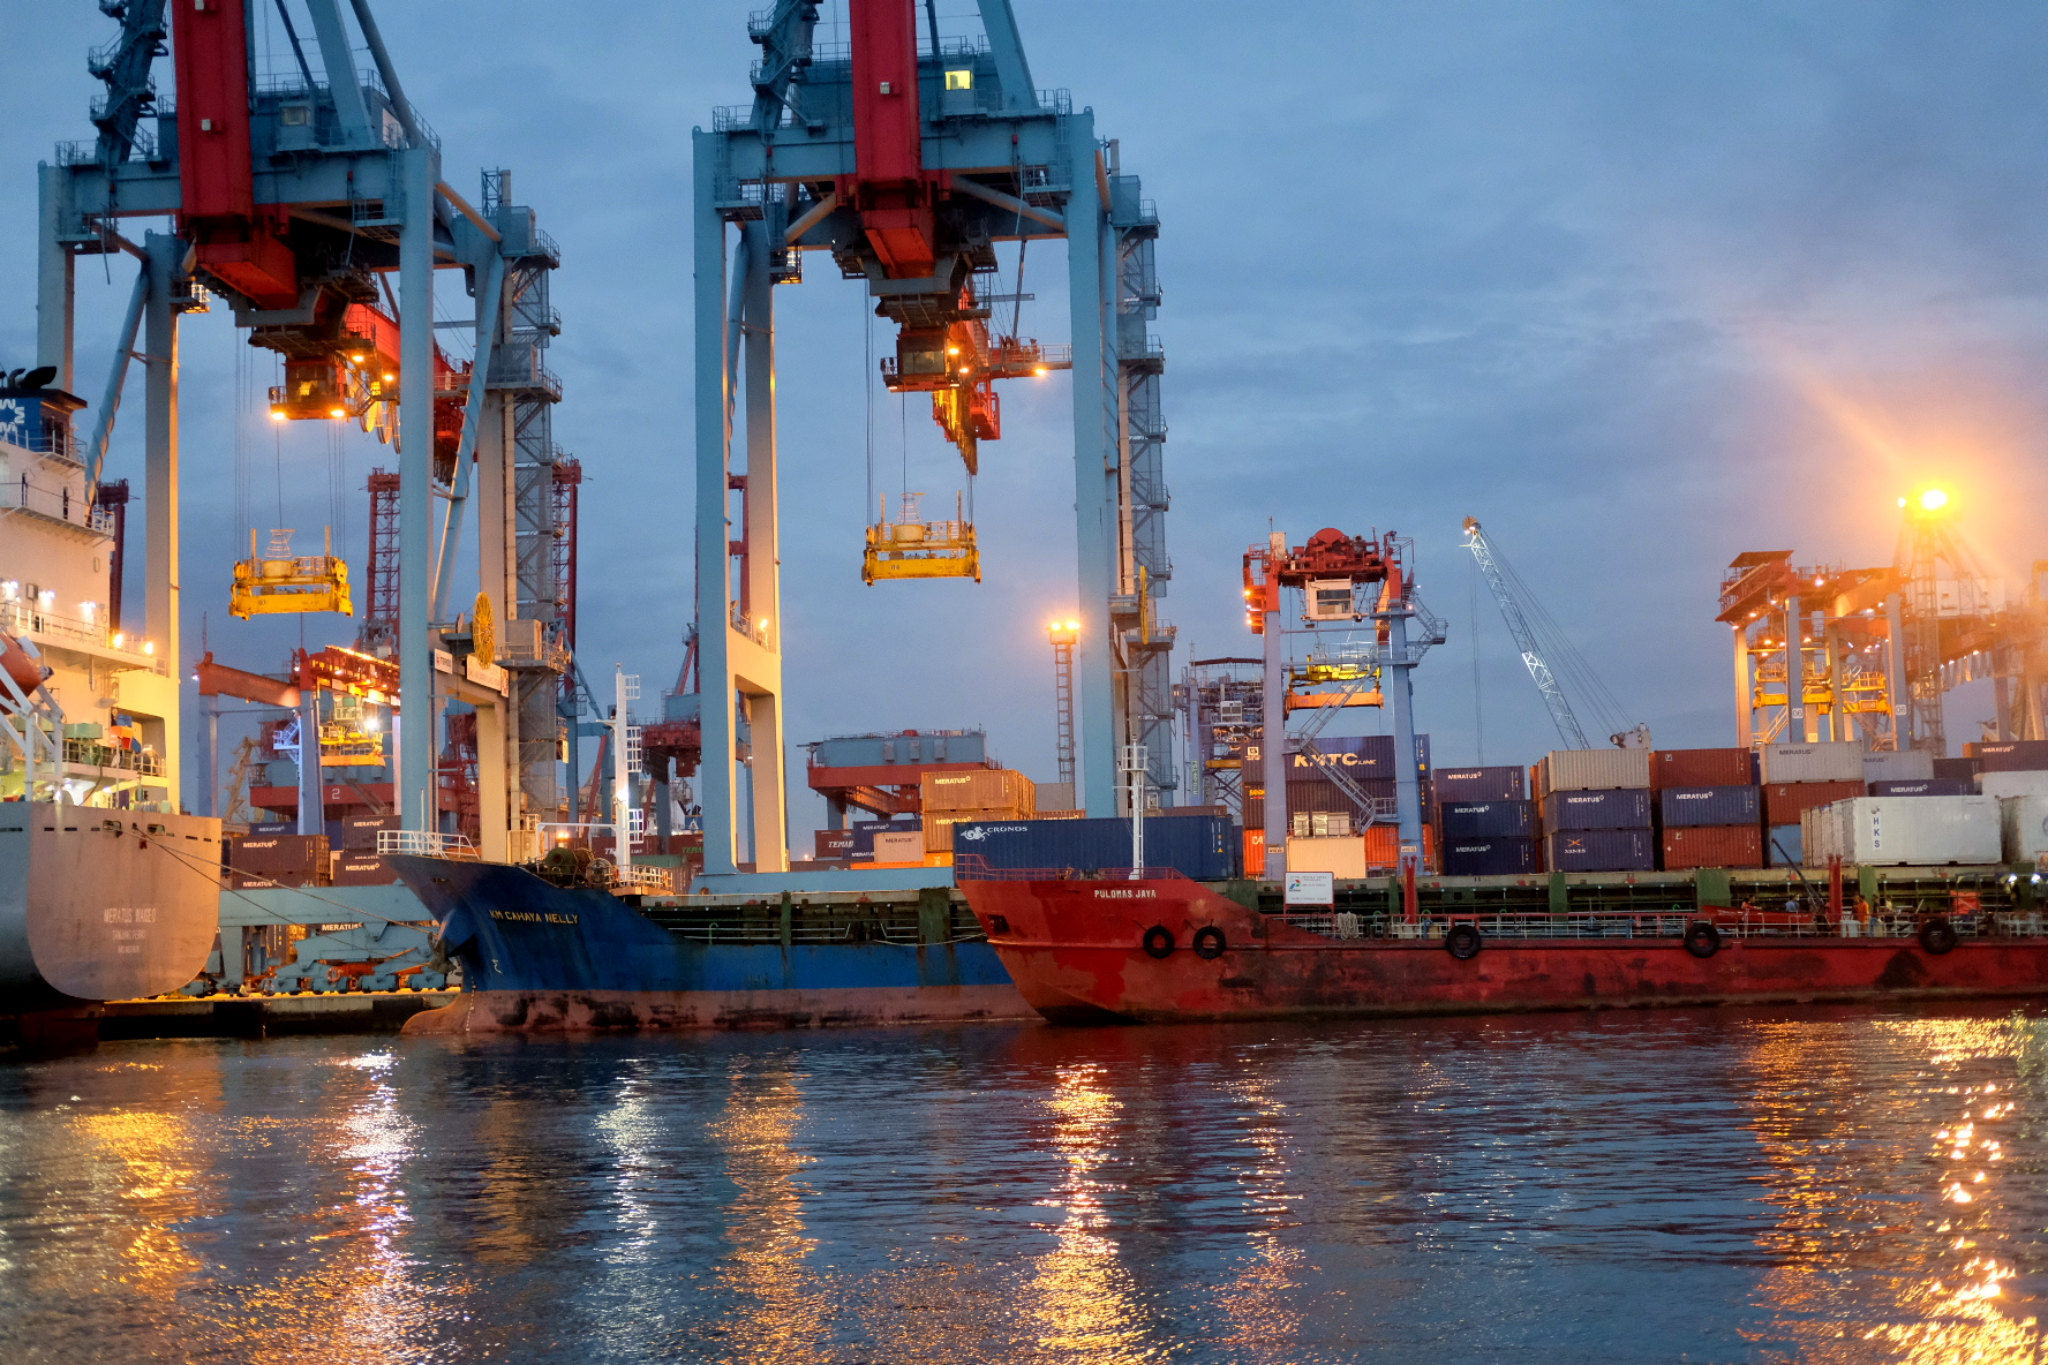 <p>Suasana crane bongkar muat peti kemas di dermaga Pelabuhan Tanjung Priok, Jakarta, Senin, 11 Januari 2021. Foto: Ismail Pohan/TrenAsia</p>
